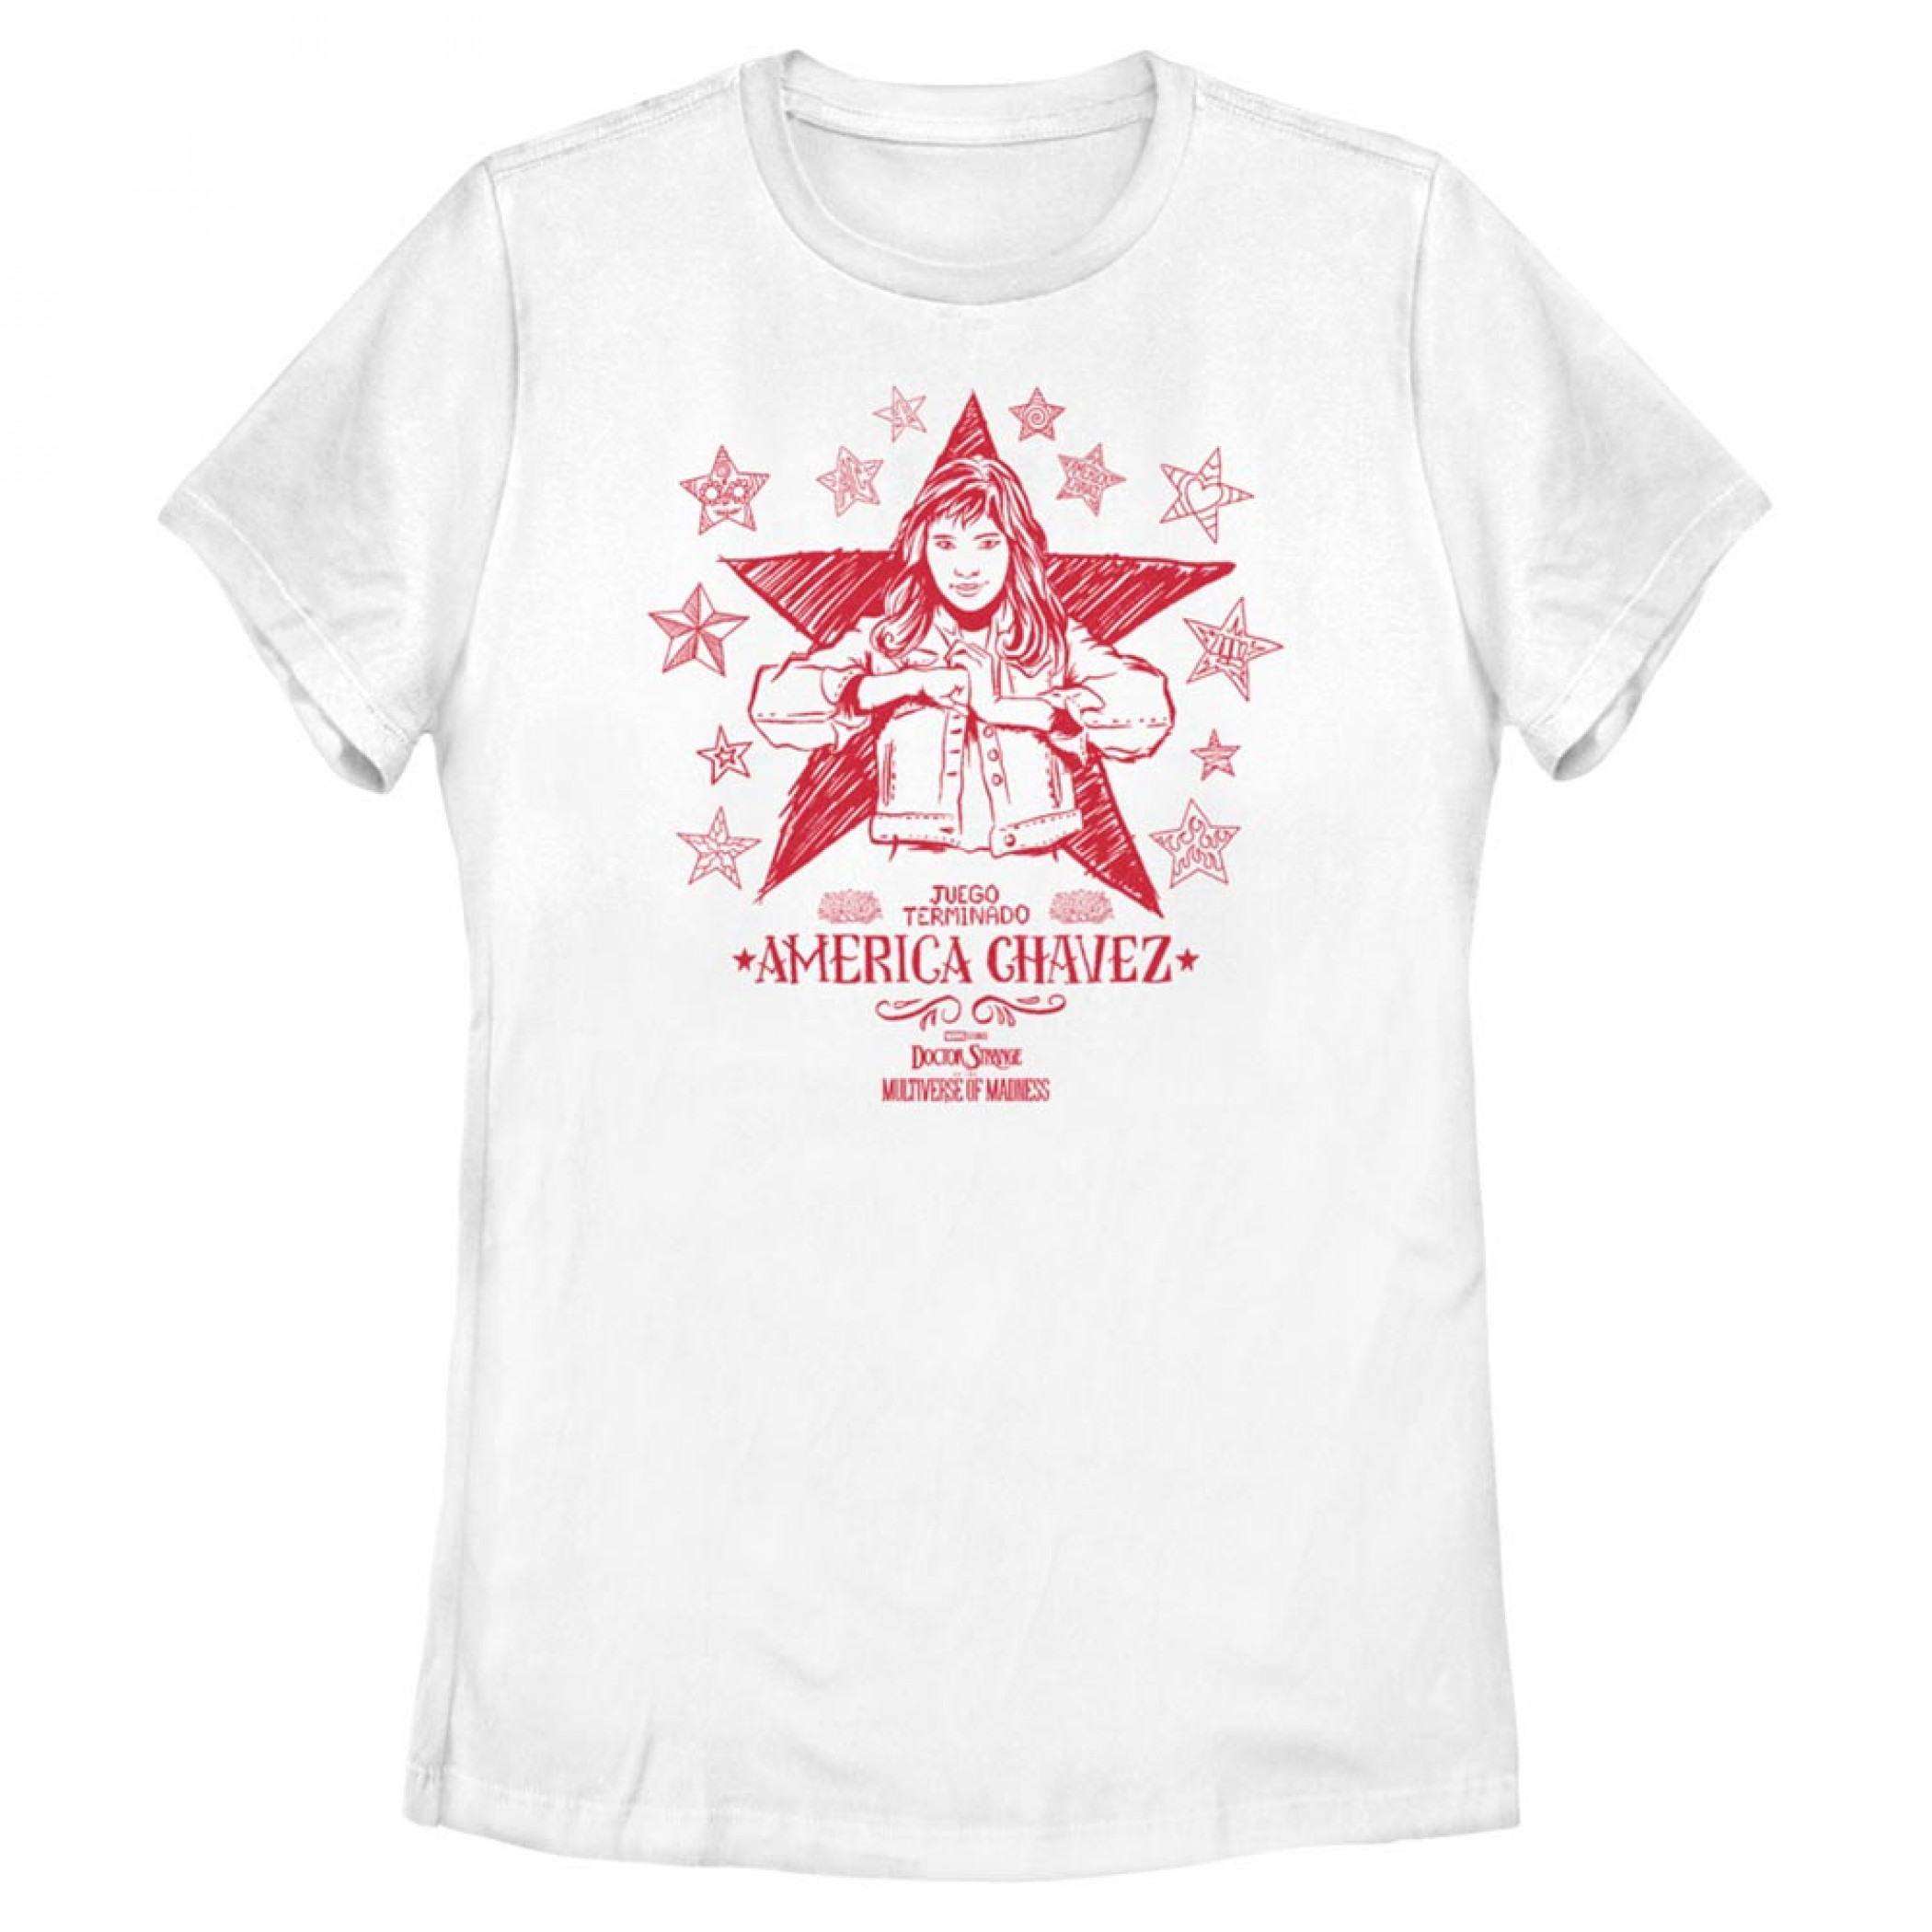 America Chavez Sketchy Stars Women's T-Shirt